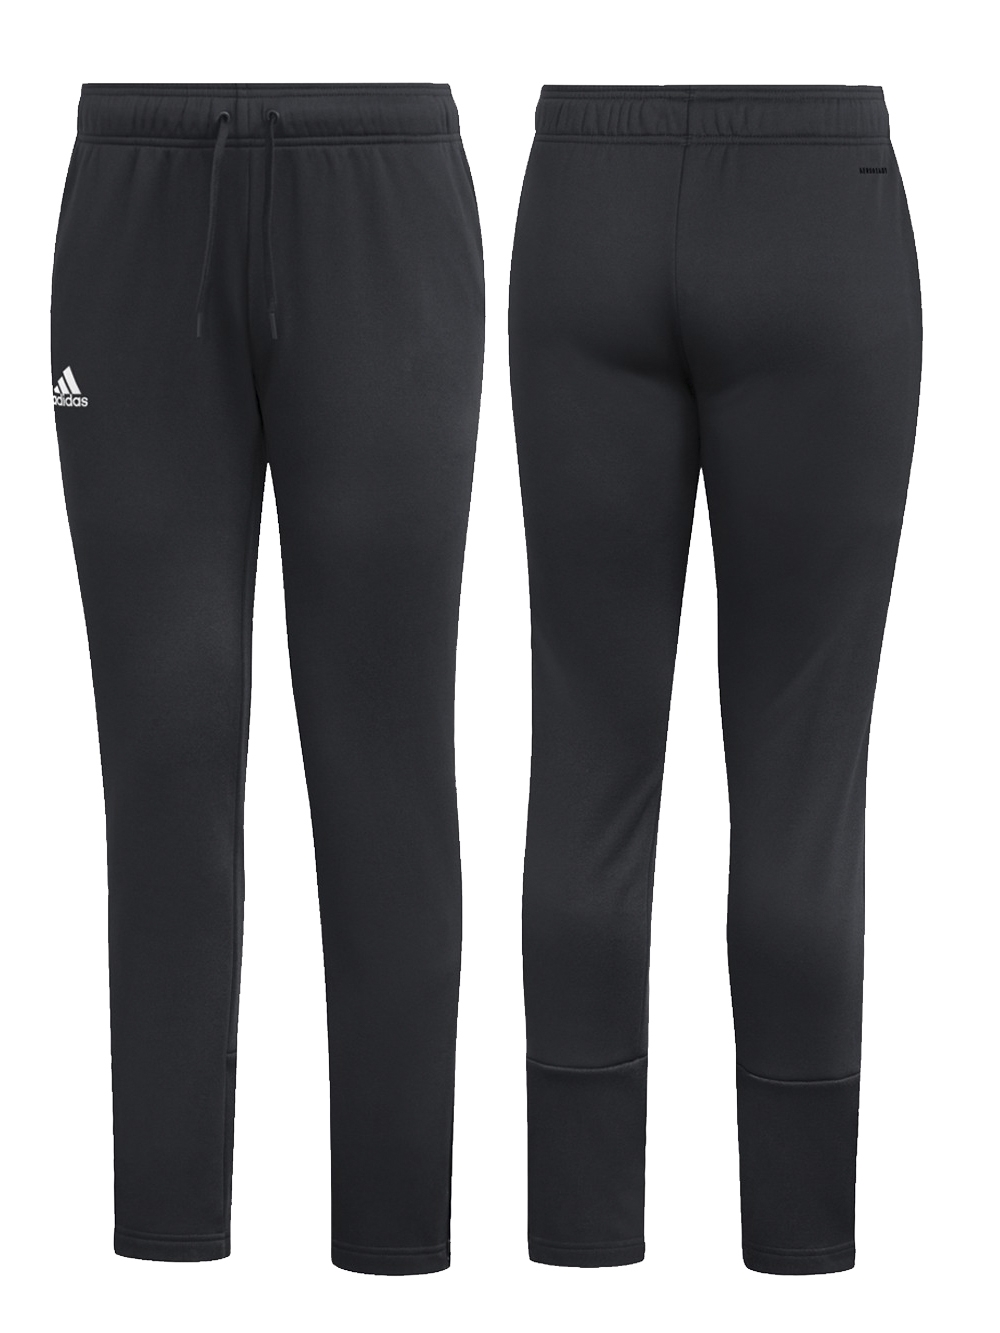 adidas | Pants | Adidas Mens Team Issue Fleece Athletic Sweatpants Grey Nwt  | Poshmark